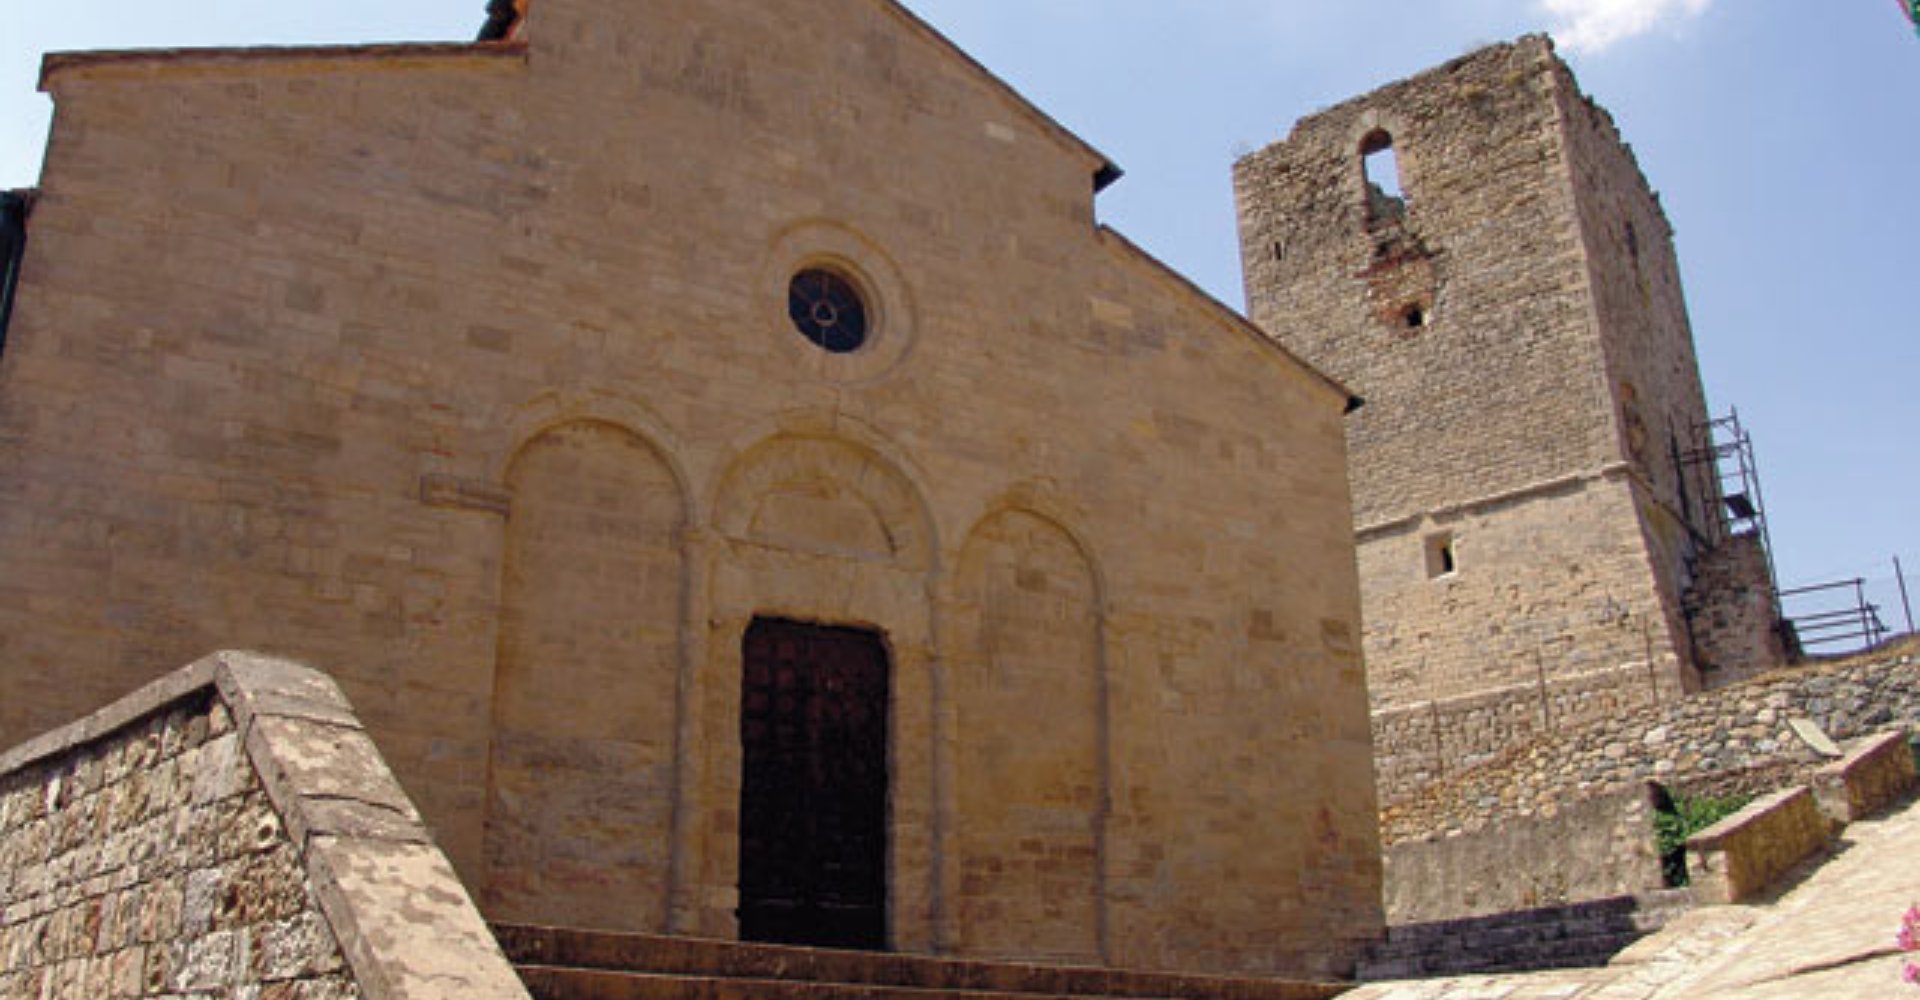 The Parish Church of Saints Jacopo and Filippo in Montecastelli